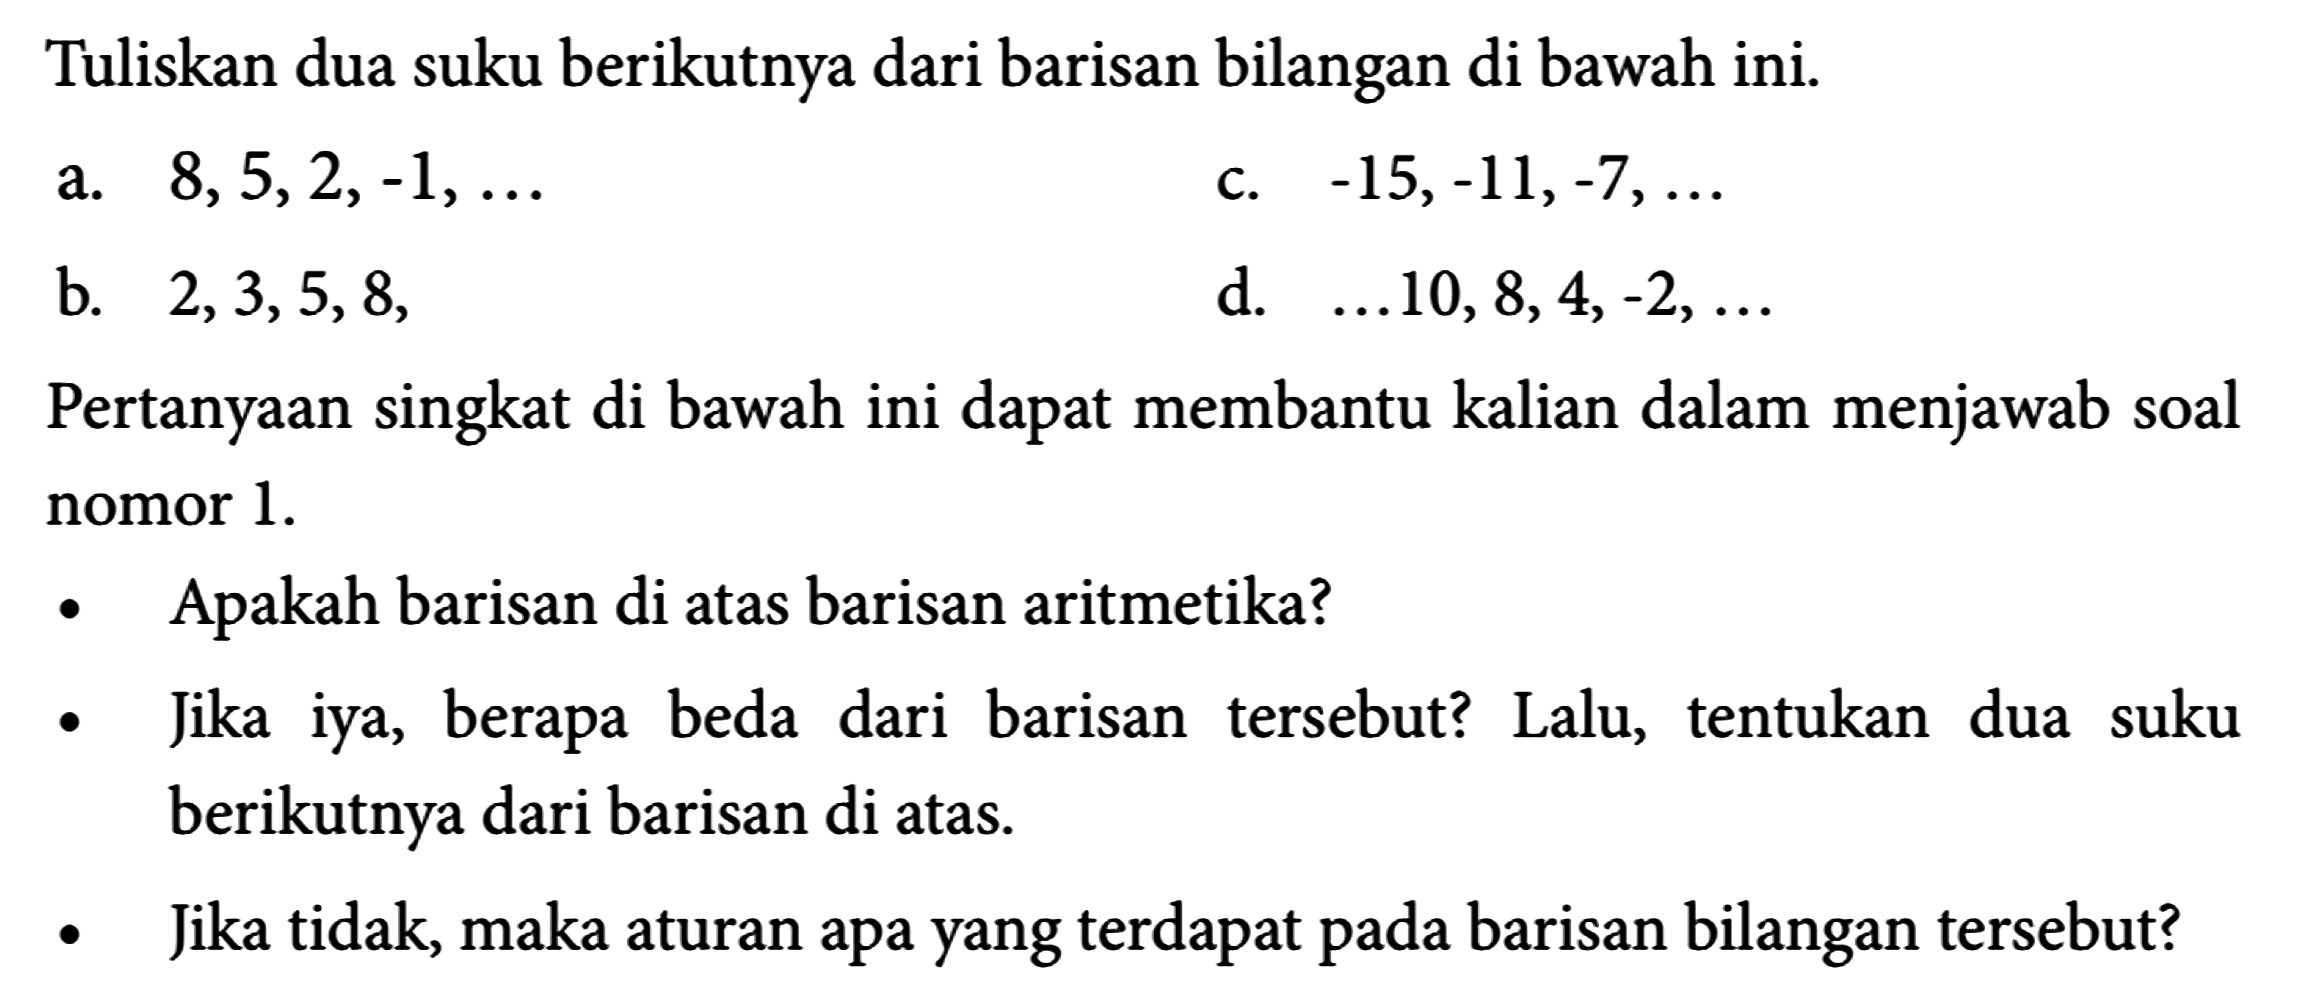 Tuliskan dua suku berikutnya dari barisan bilangan di bawah ini.
a. 8,5,2,-1, ... c. -15,-11,-7, ... b. 2,3,5,8, d. ... 10,8,4,-2, ... Pertanyaan singkat di bawah ini dapat membantu kalian dalam menjawab soal nomor 1.
- Apakah barisan di atas barisan aritmetika?
- Jika iya, berapa beda dari barisan tersebut? Lalu, tentukan dua suku berikutnya dari barisan di atas.
- Jika tidak, maka aturan apa yang terdapat pada barisan bilangan tersebut?